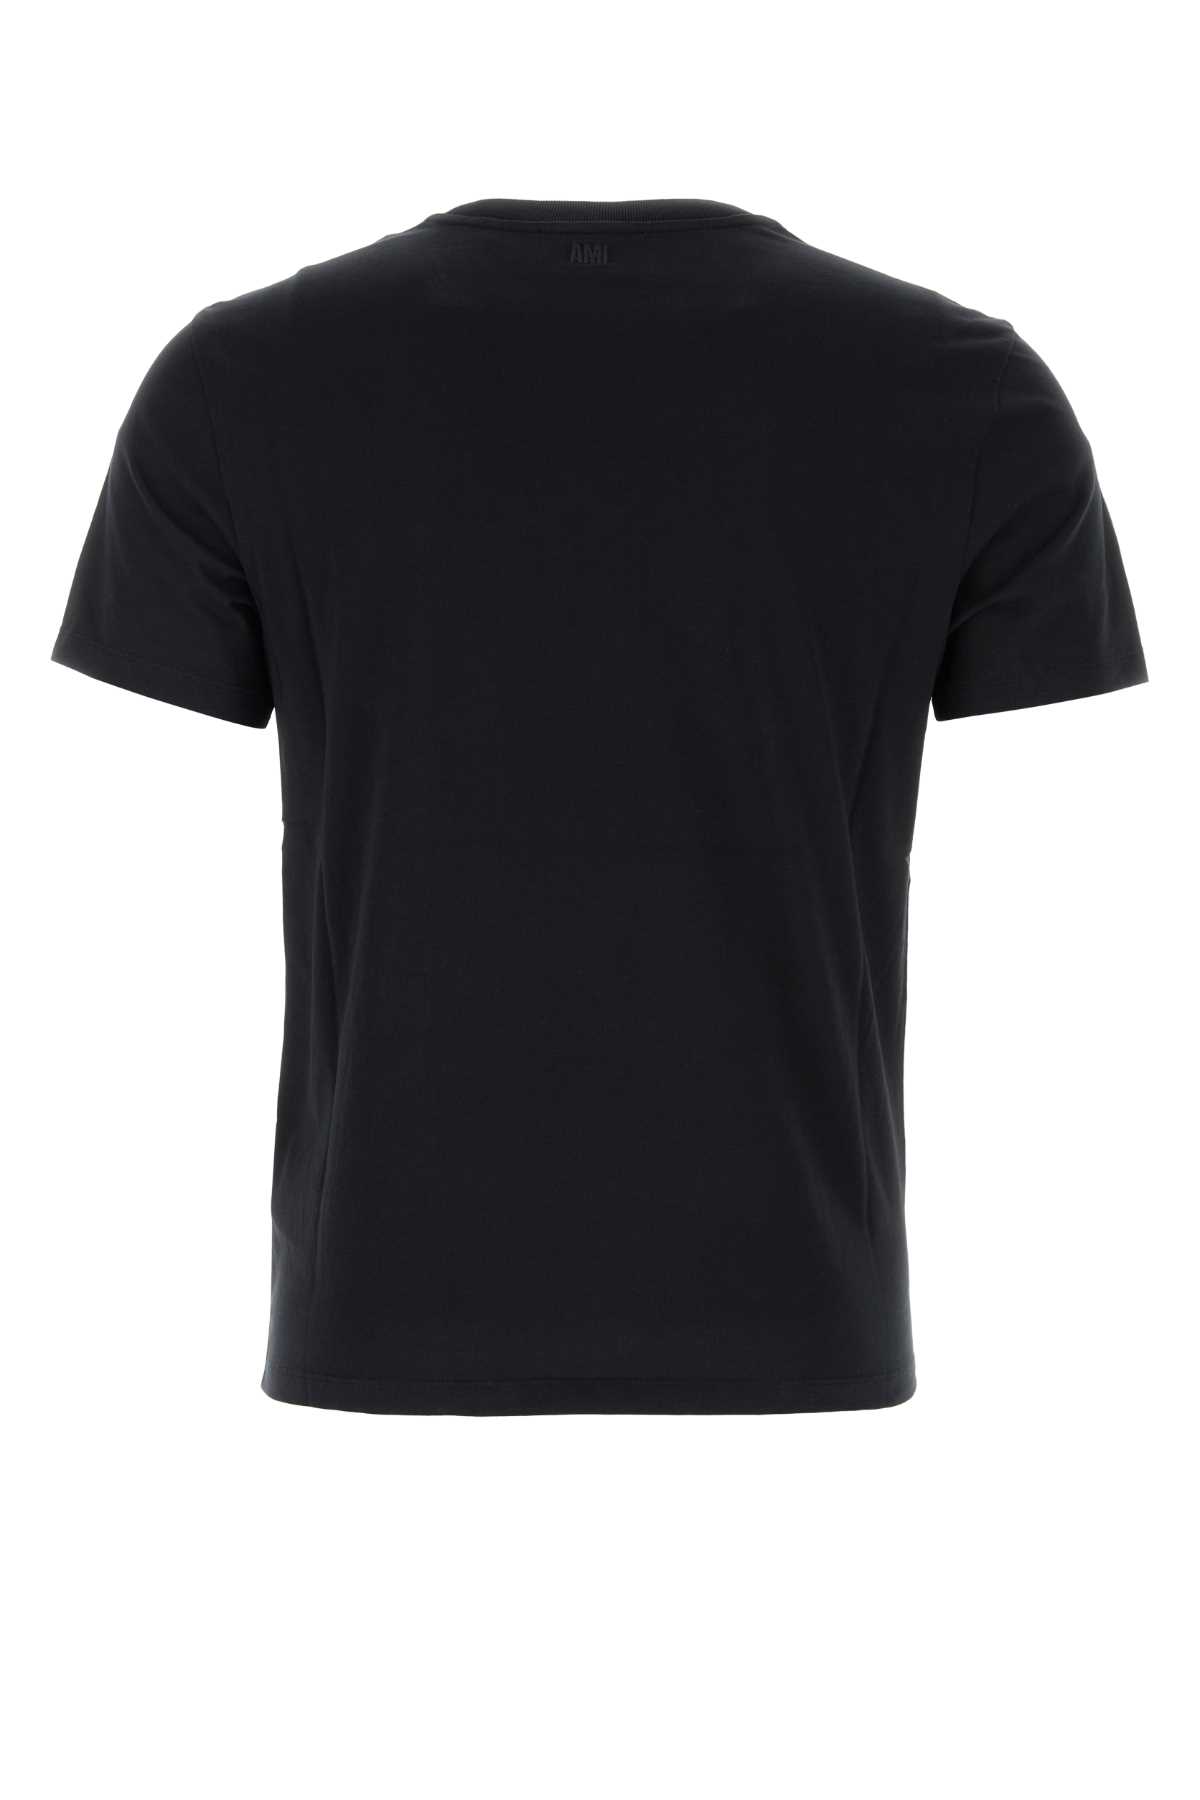 Ami Alexandre Mattiussi Black Cotton T-shirt